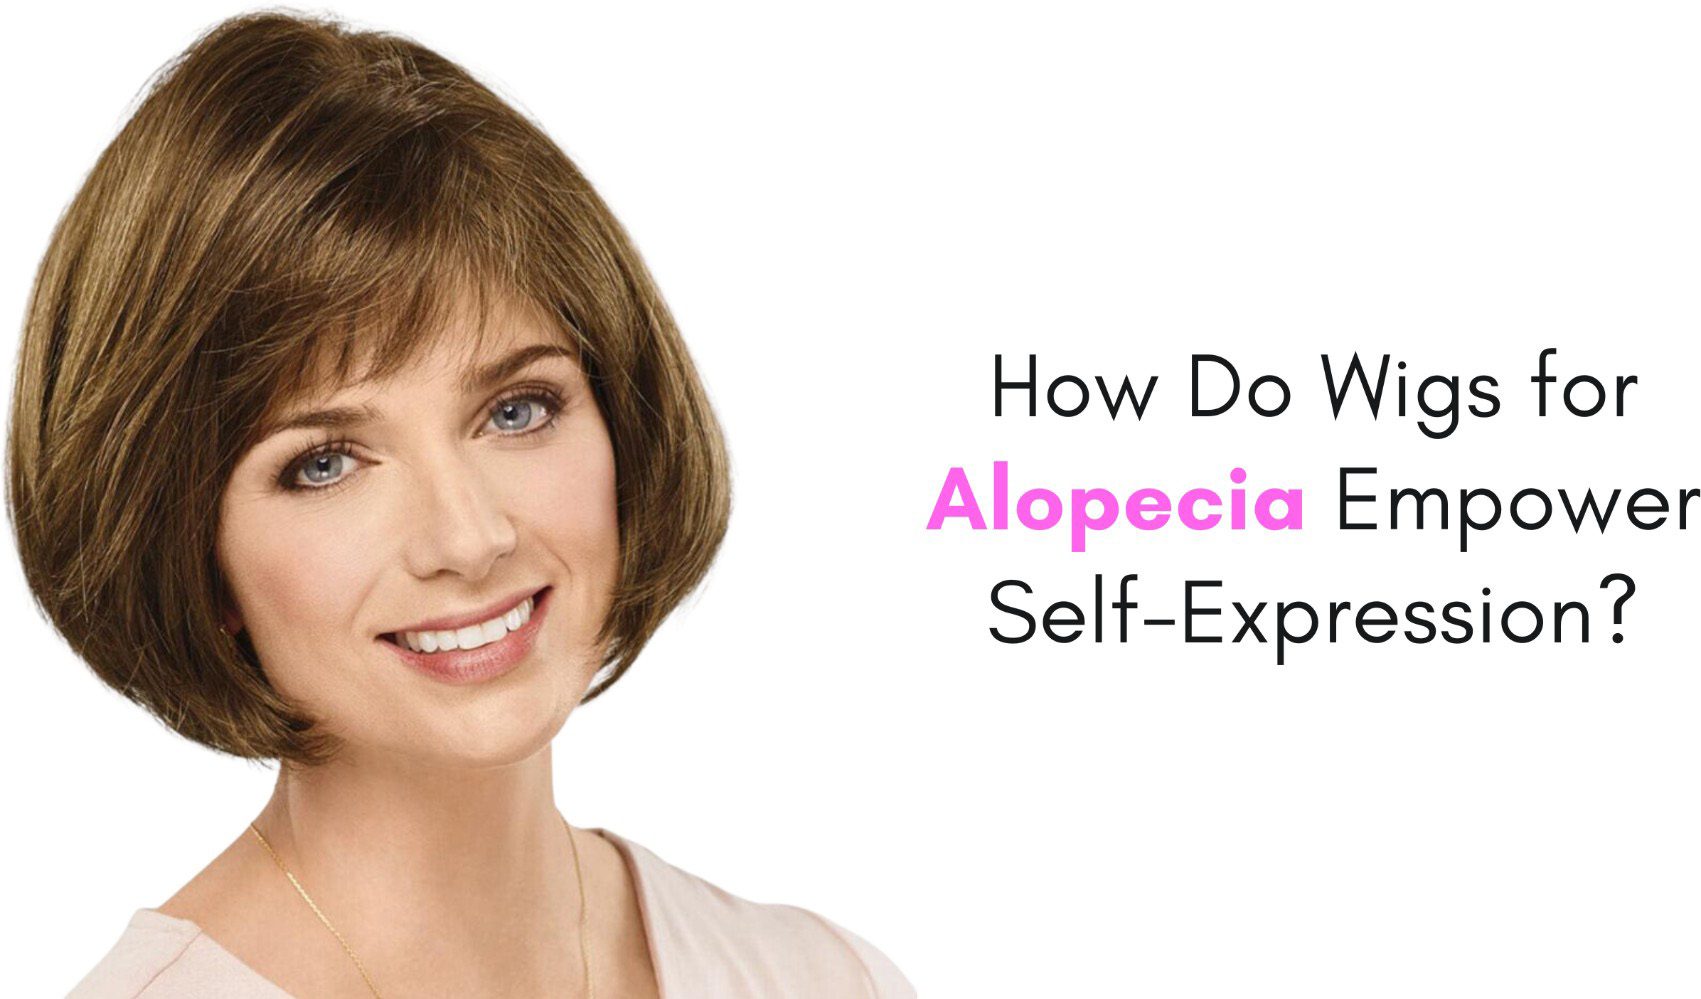 How Do Wigs for Alopecia Empower Self-Expression?